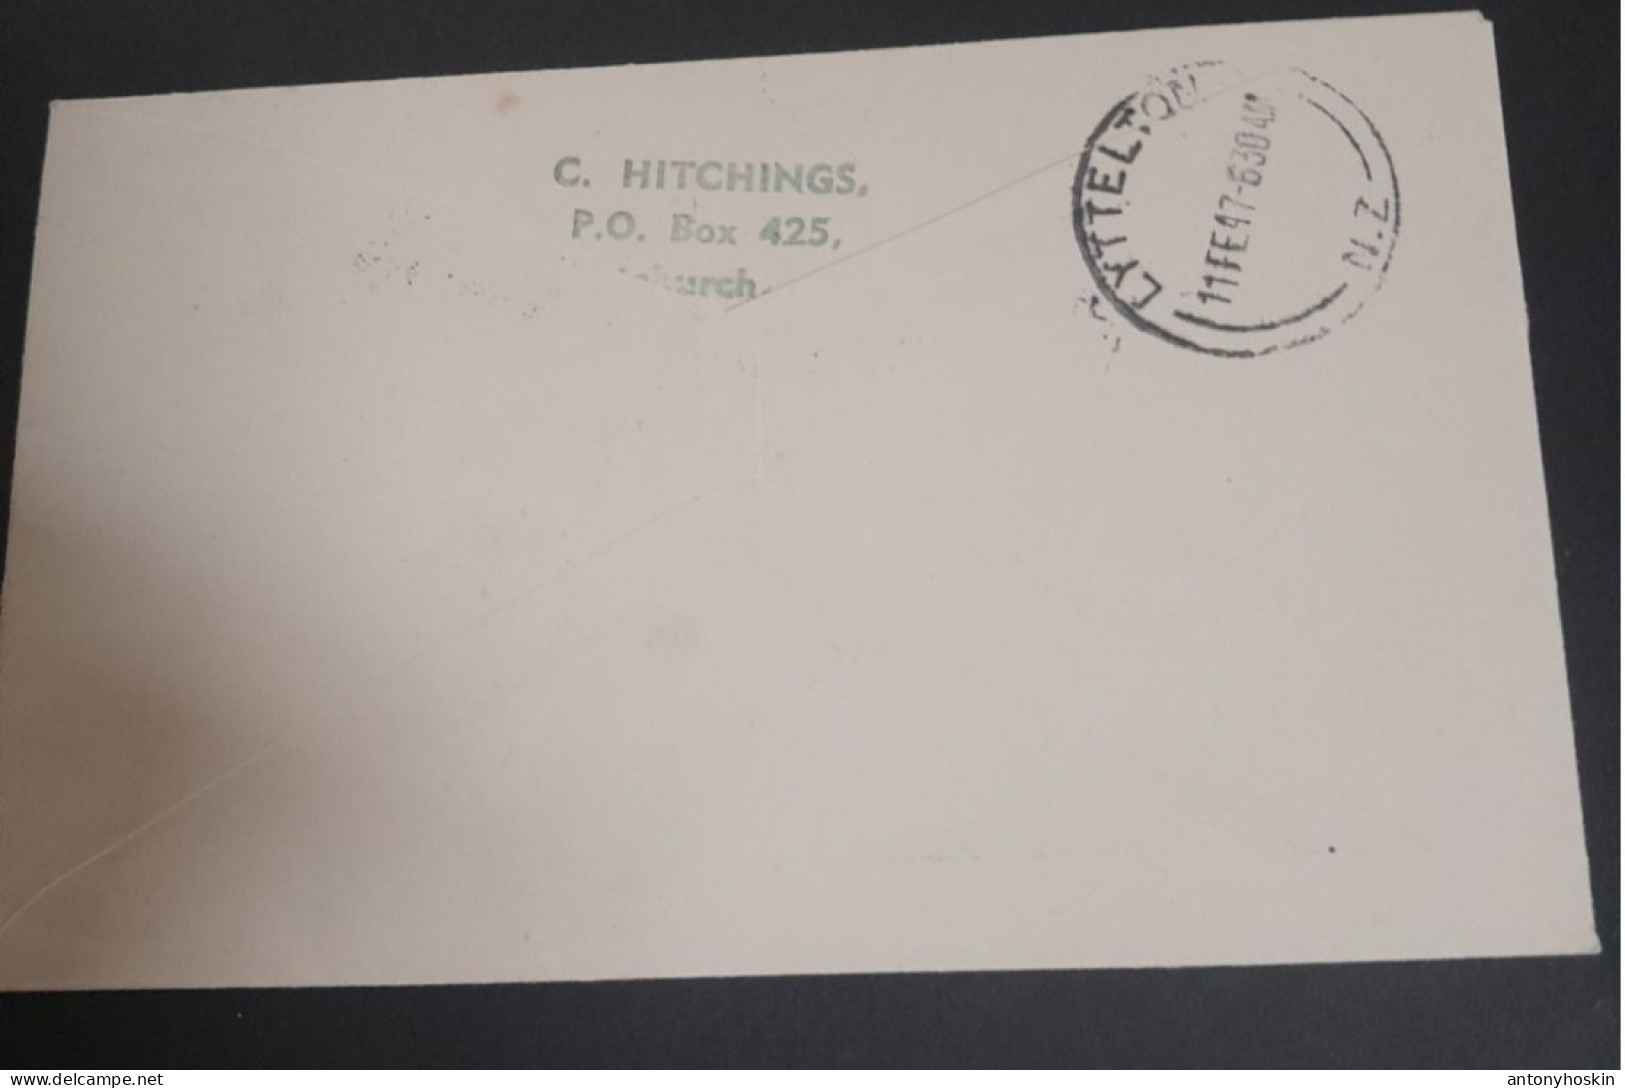 10 Feb 1947 Maiden Voyage  T.E.V Hinemoa Wellington To Lyettlton - Briefe U. Dokumente